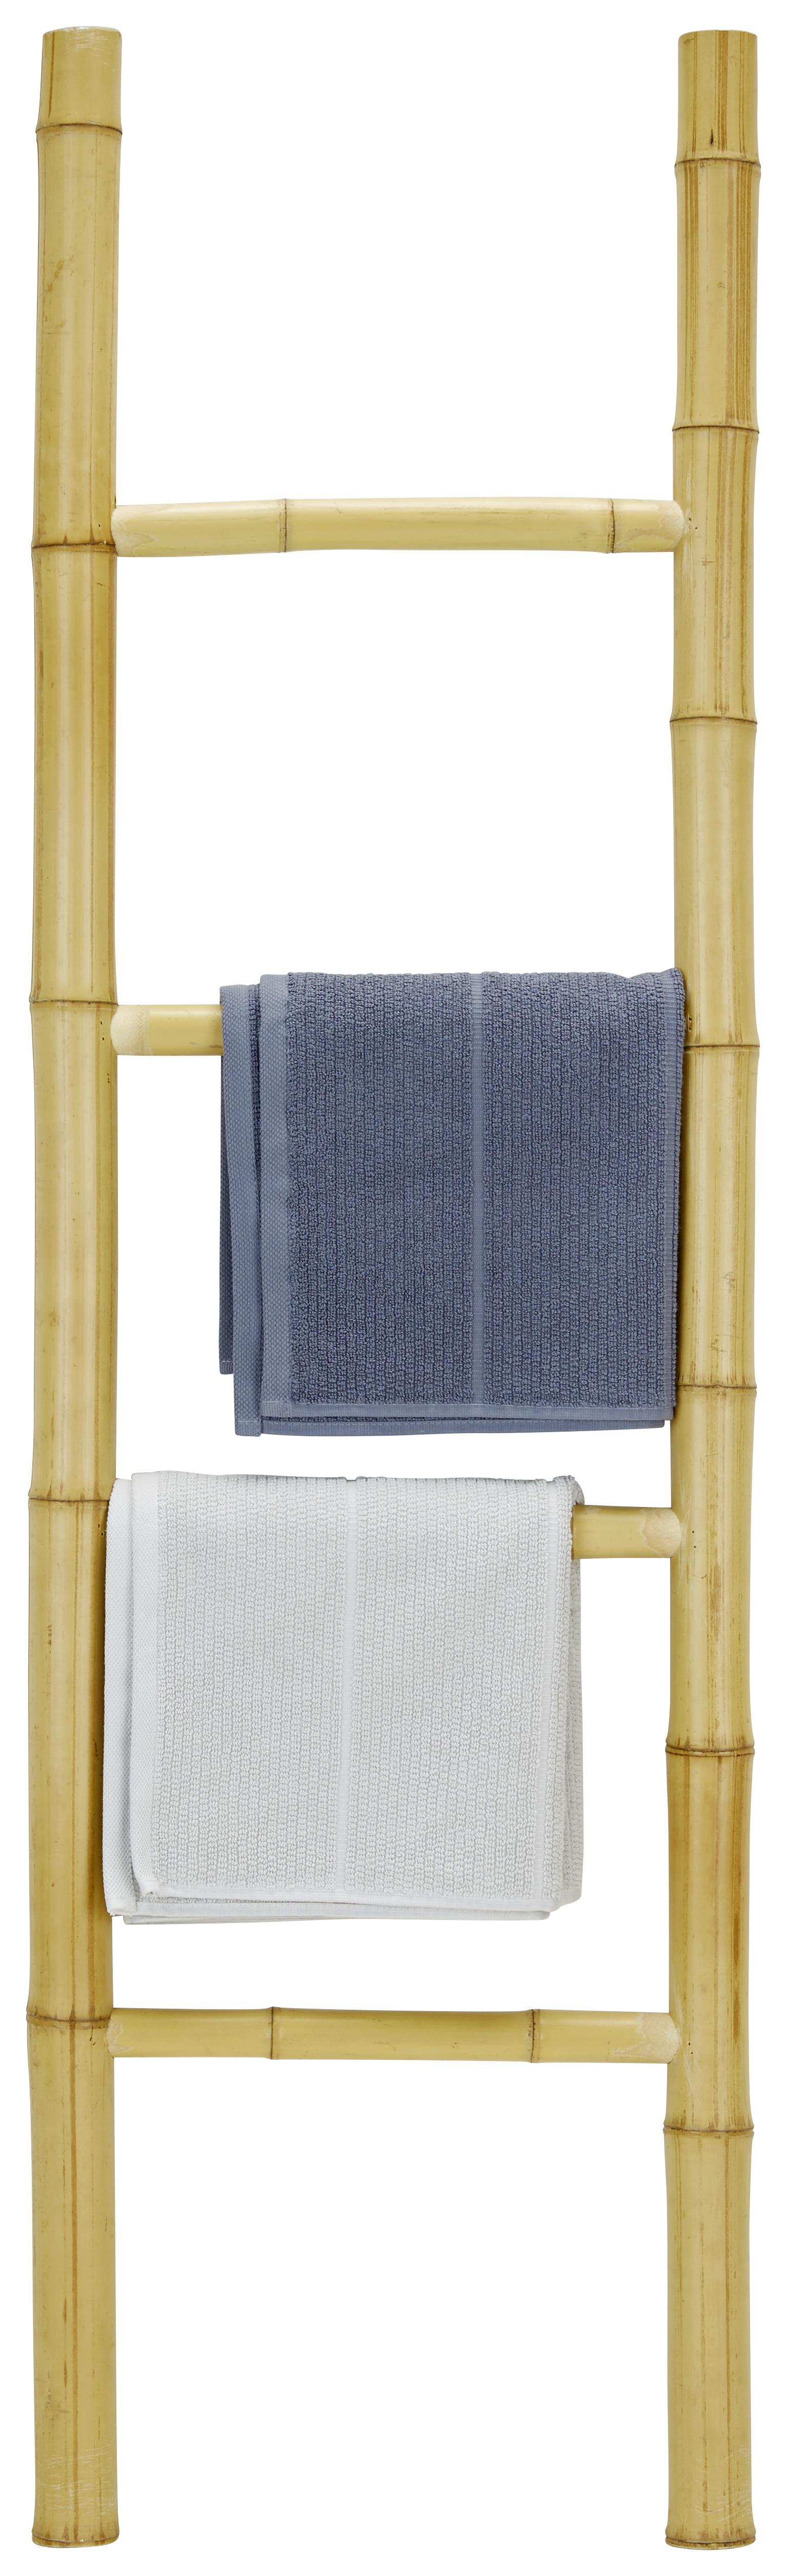 Handtuchhalter aus Bambus - Naturfarben, Holz (40/140/5cm) - Modern Living